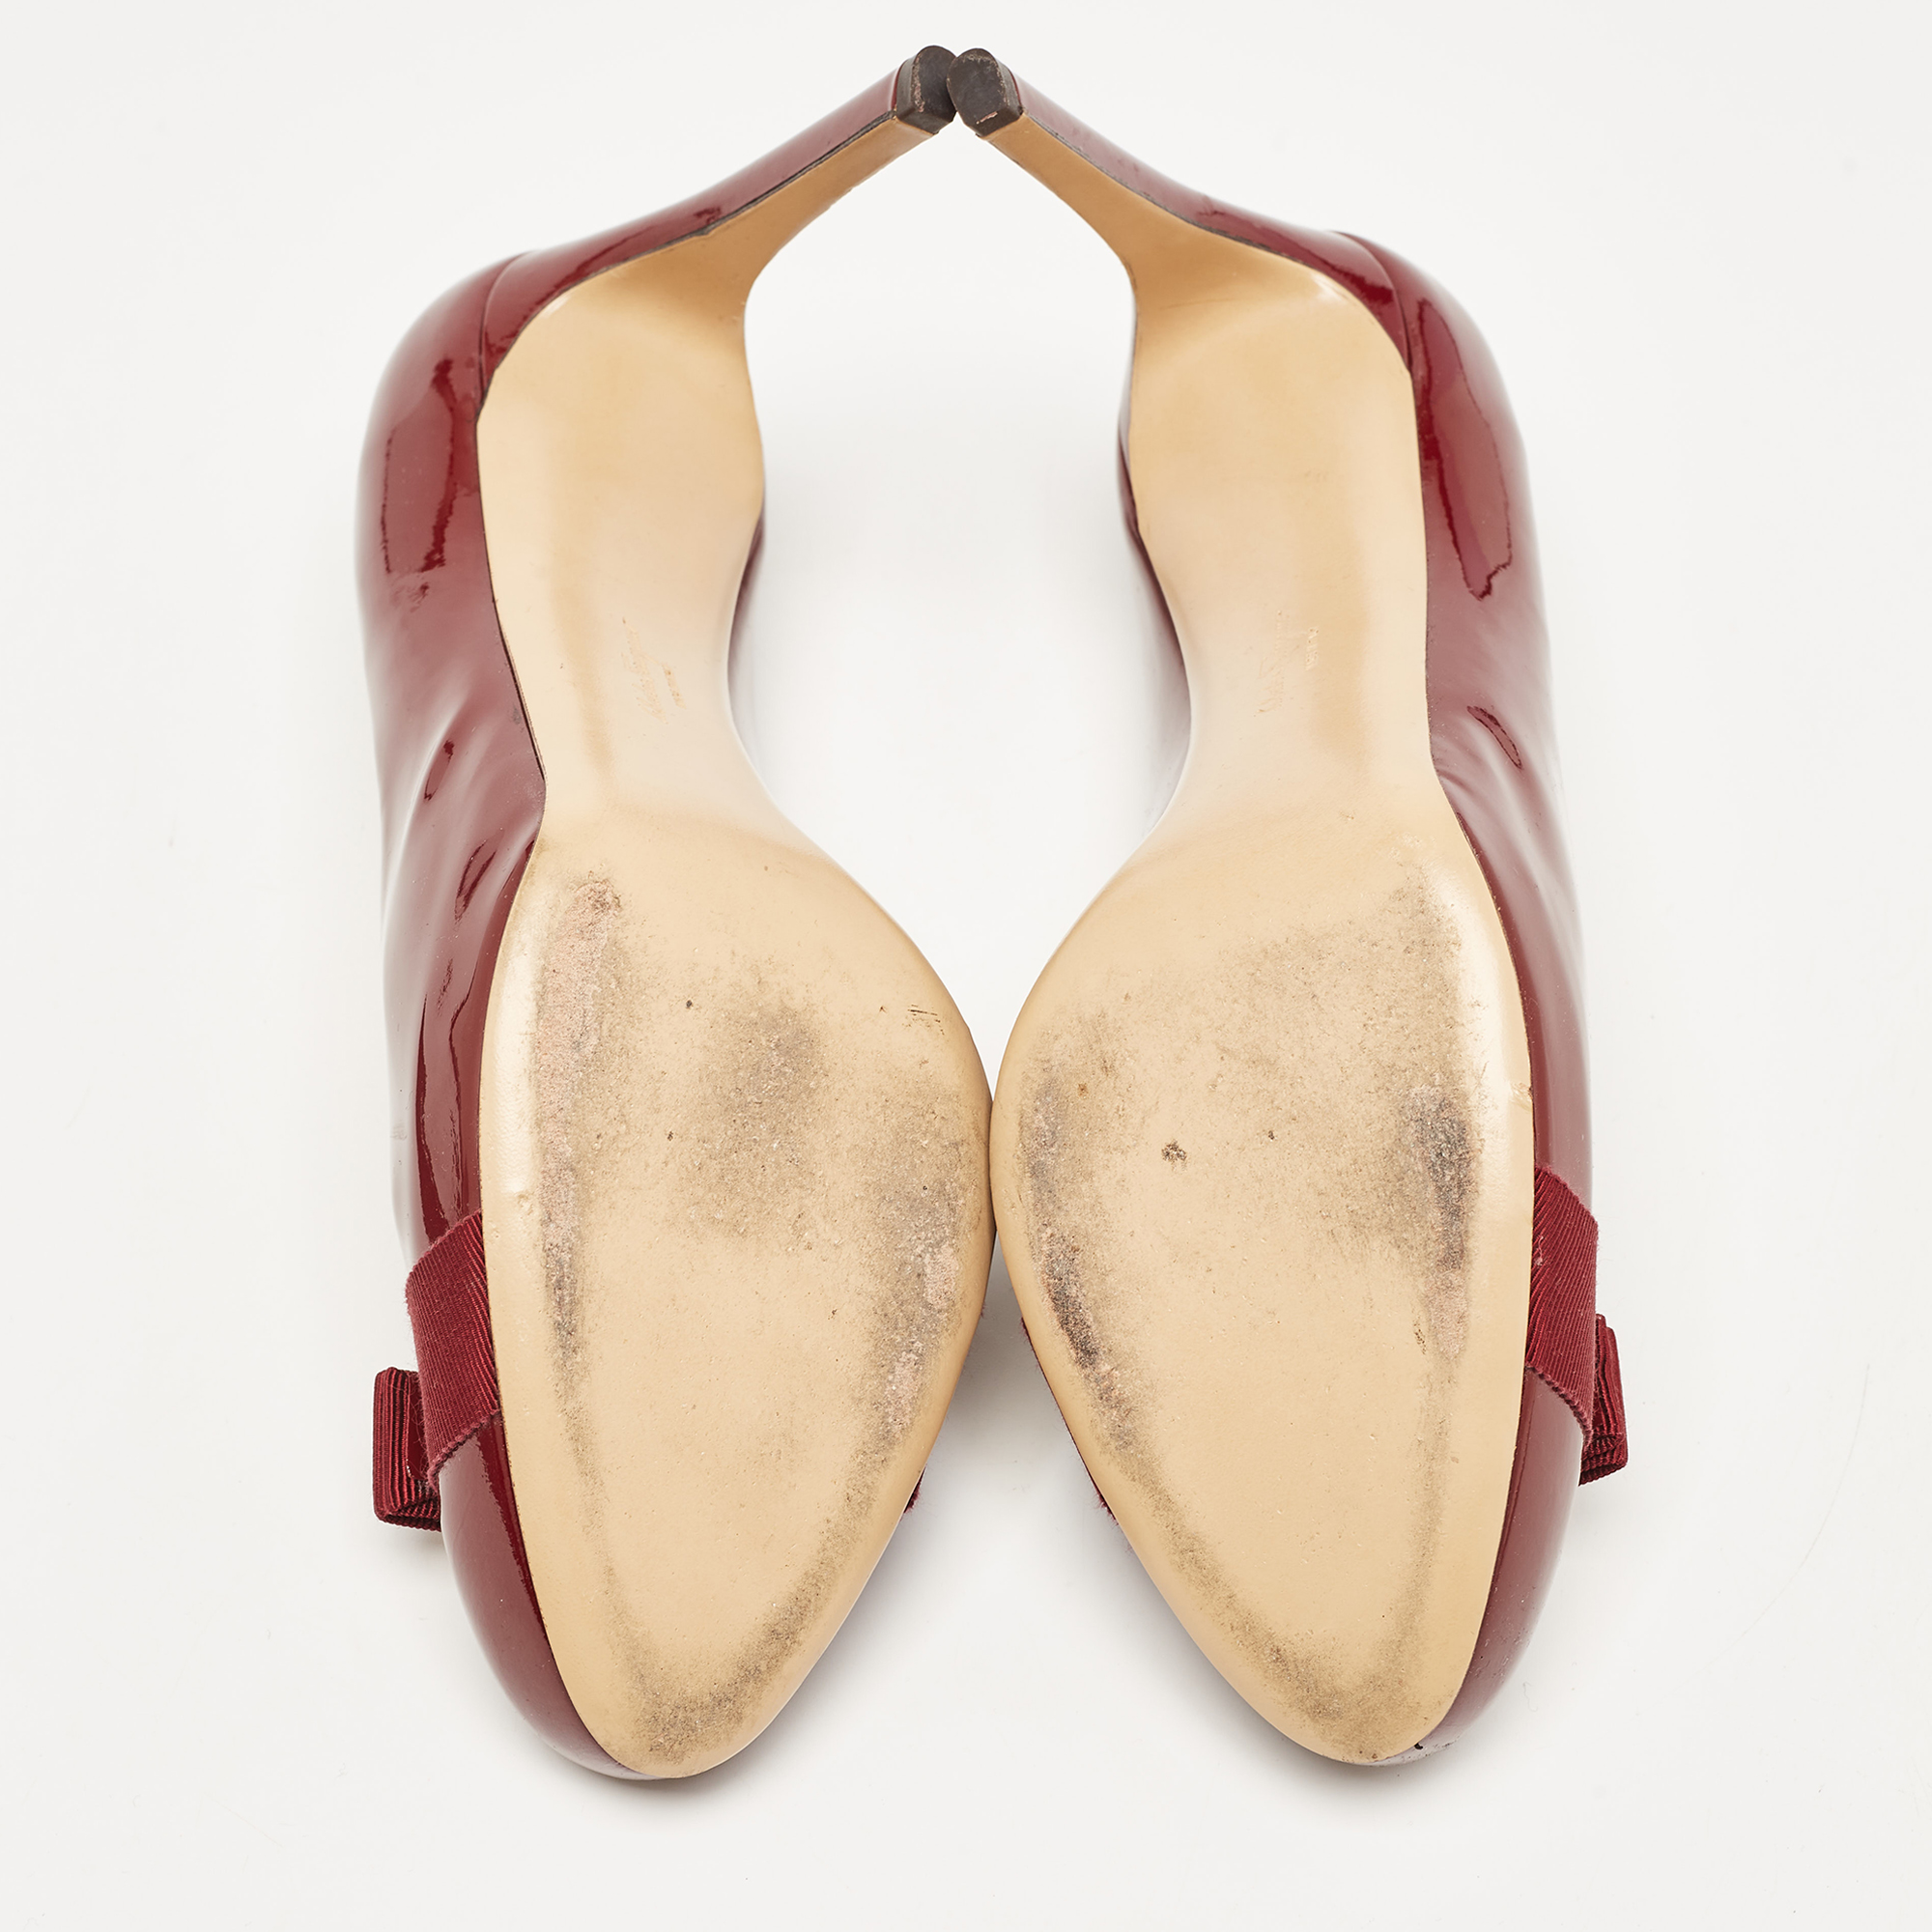 Salvatore Ferragamo Burgundy Patent Leather Vara Bow Pumps Size 41